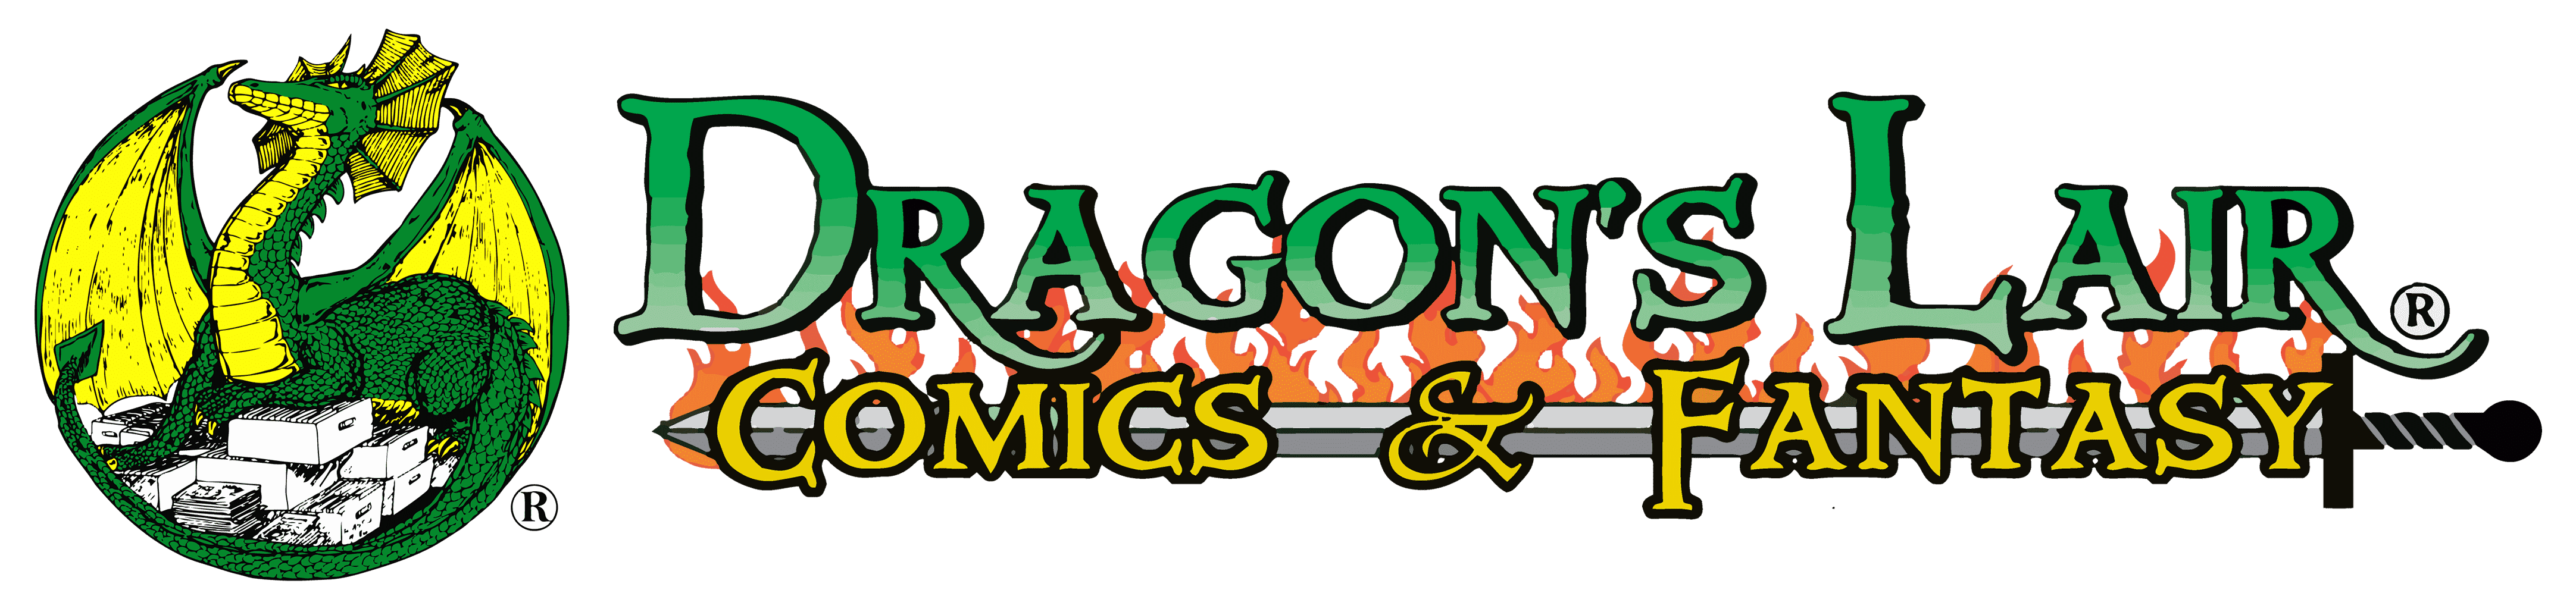 Dragons lair comics & fantasy